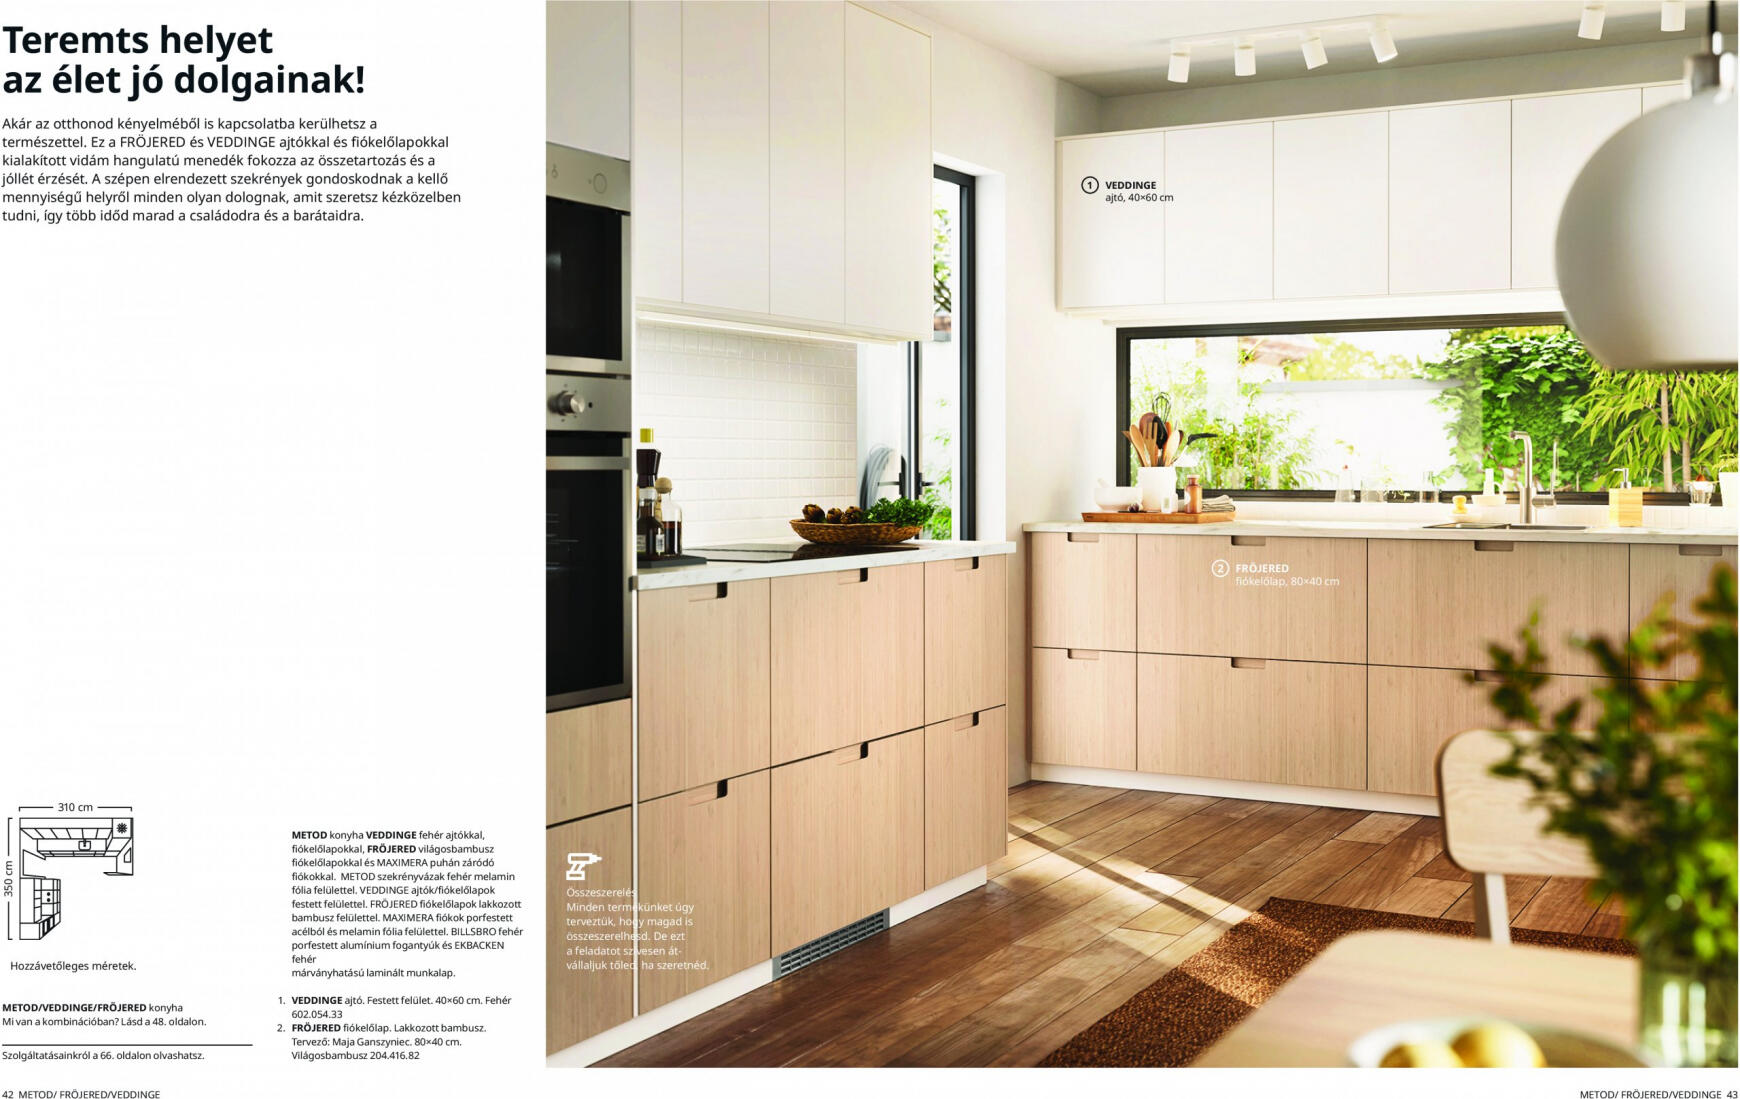 ikea - IKEA újság hétfőtől 08.22. - page: 22